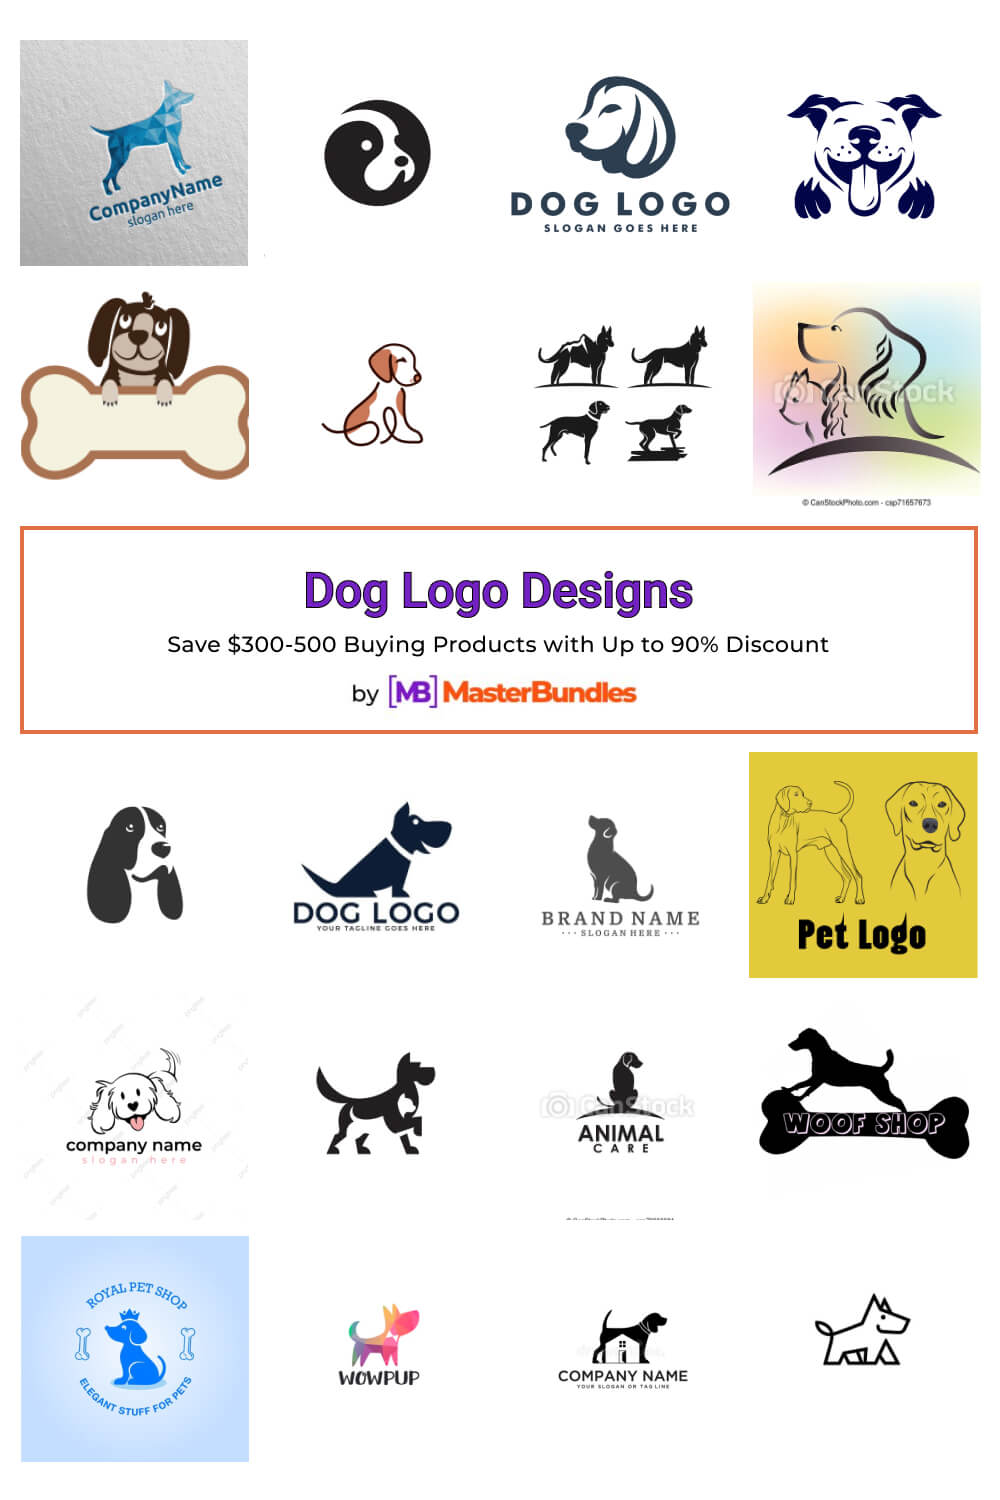 dog logo designs pinterest image.